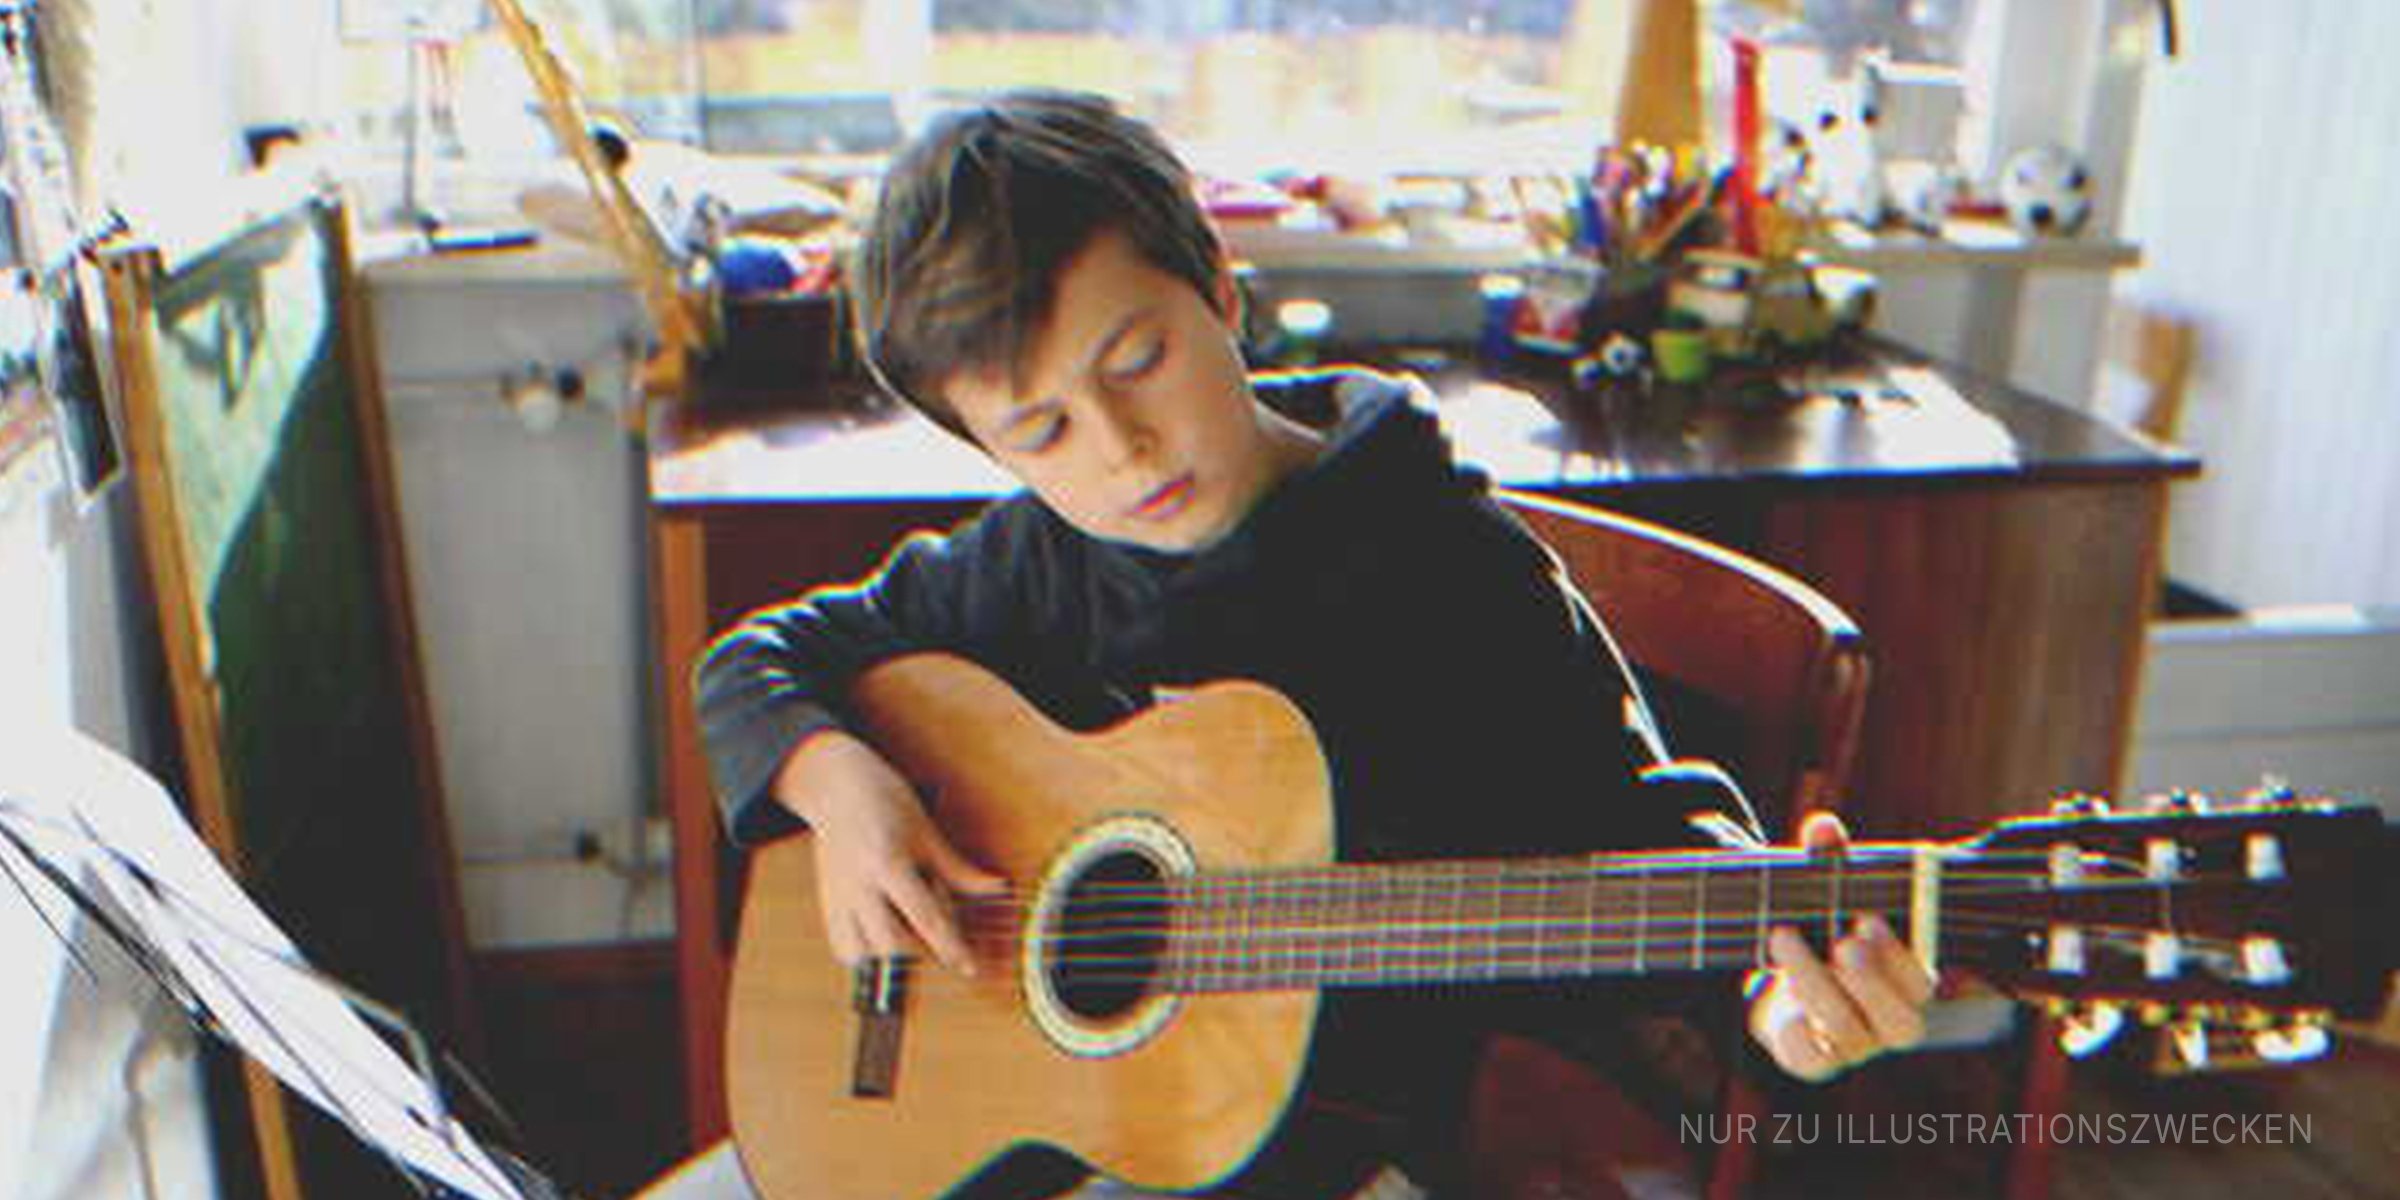 Junge spielt Gitarre | Quelle: Shutterstock